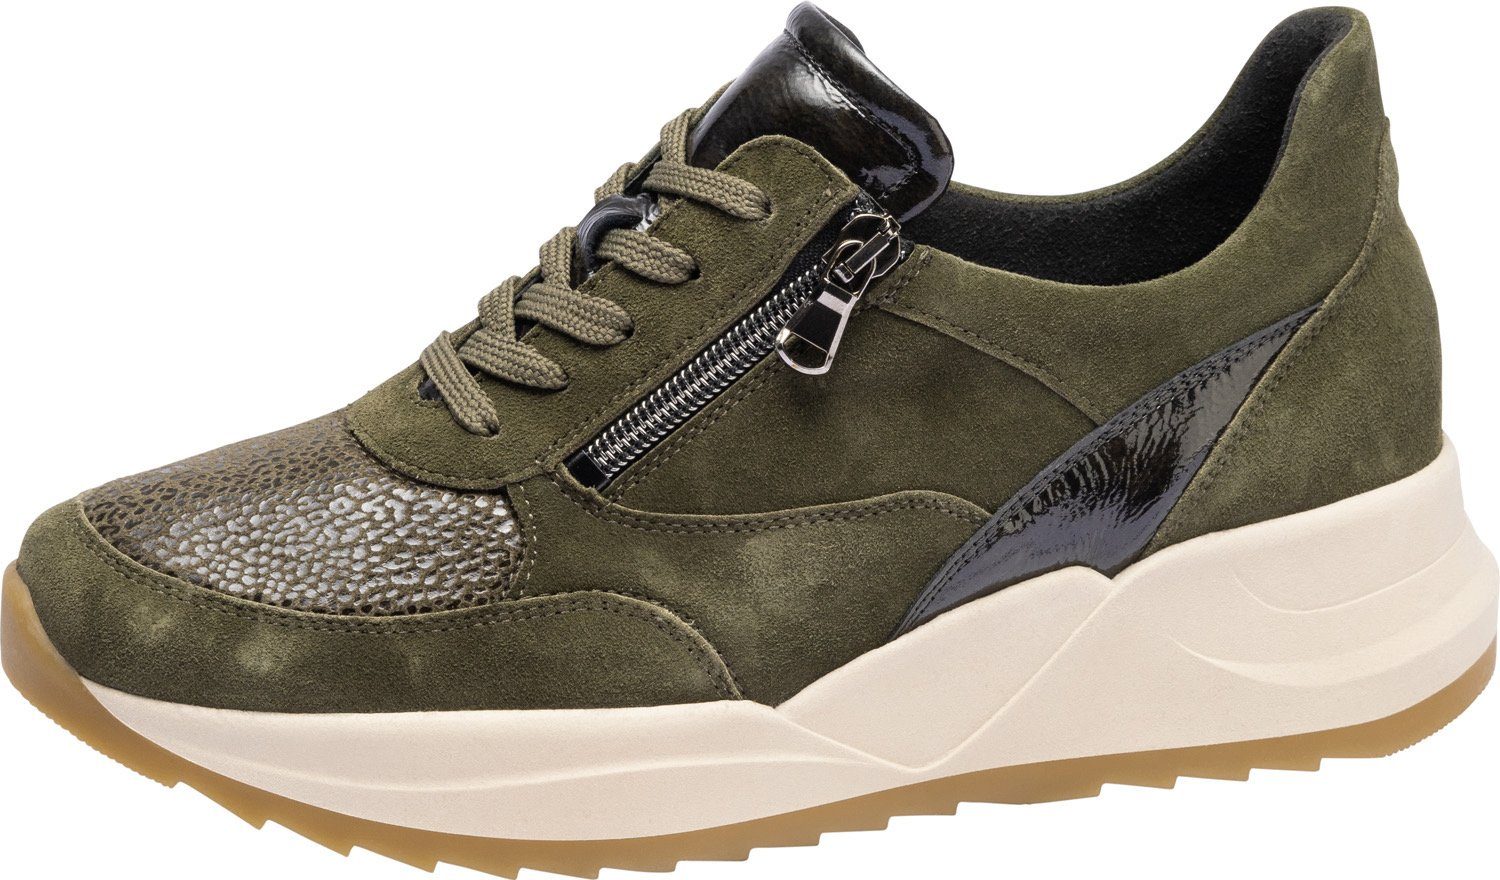 Waldläufer K-Bailey Soft Sneaker in extraweiter Schuhweite K olivgrün | Sneaker low